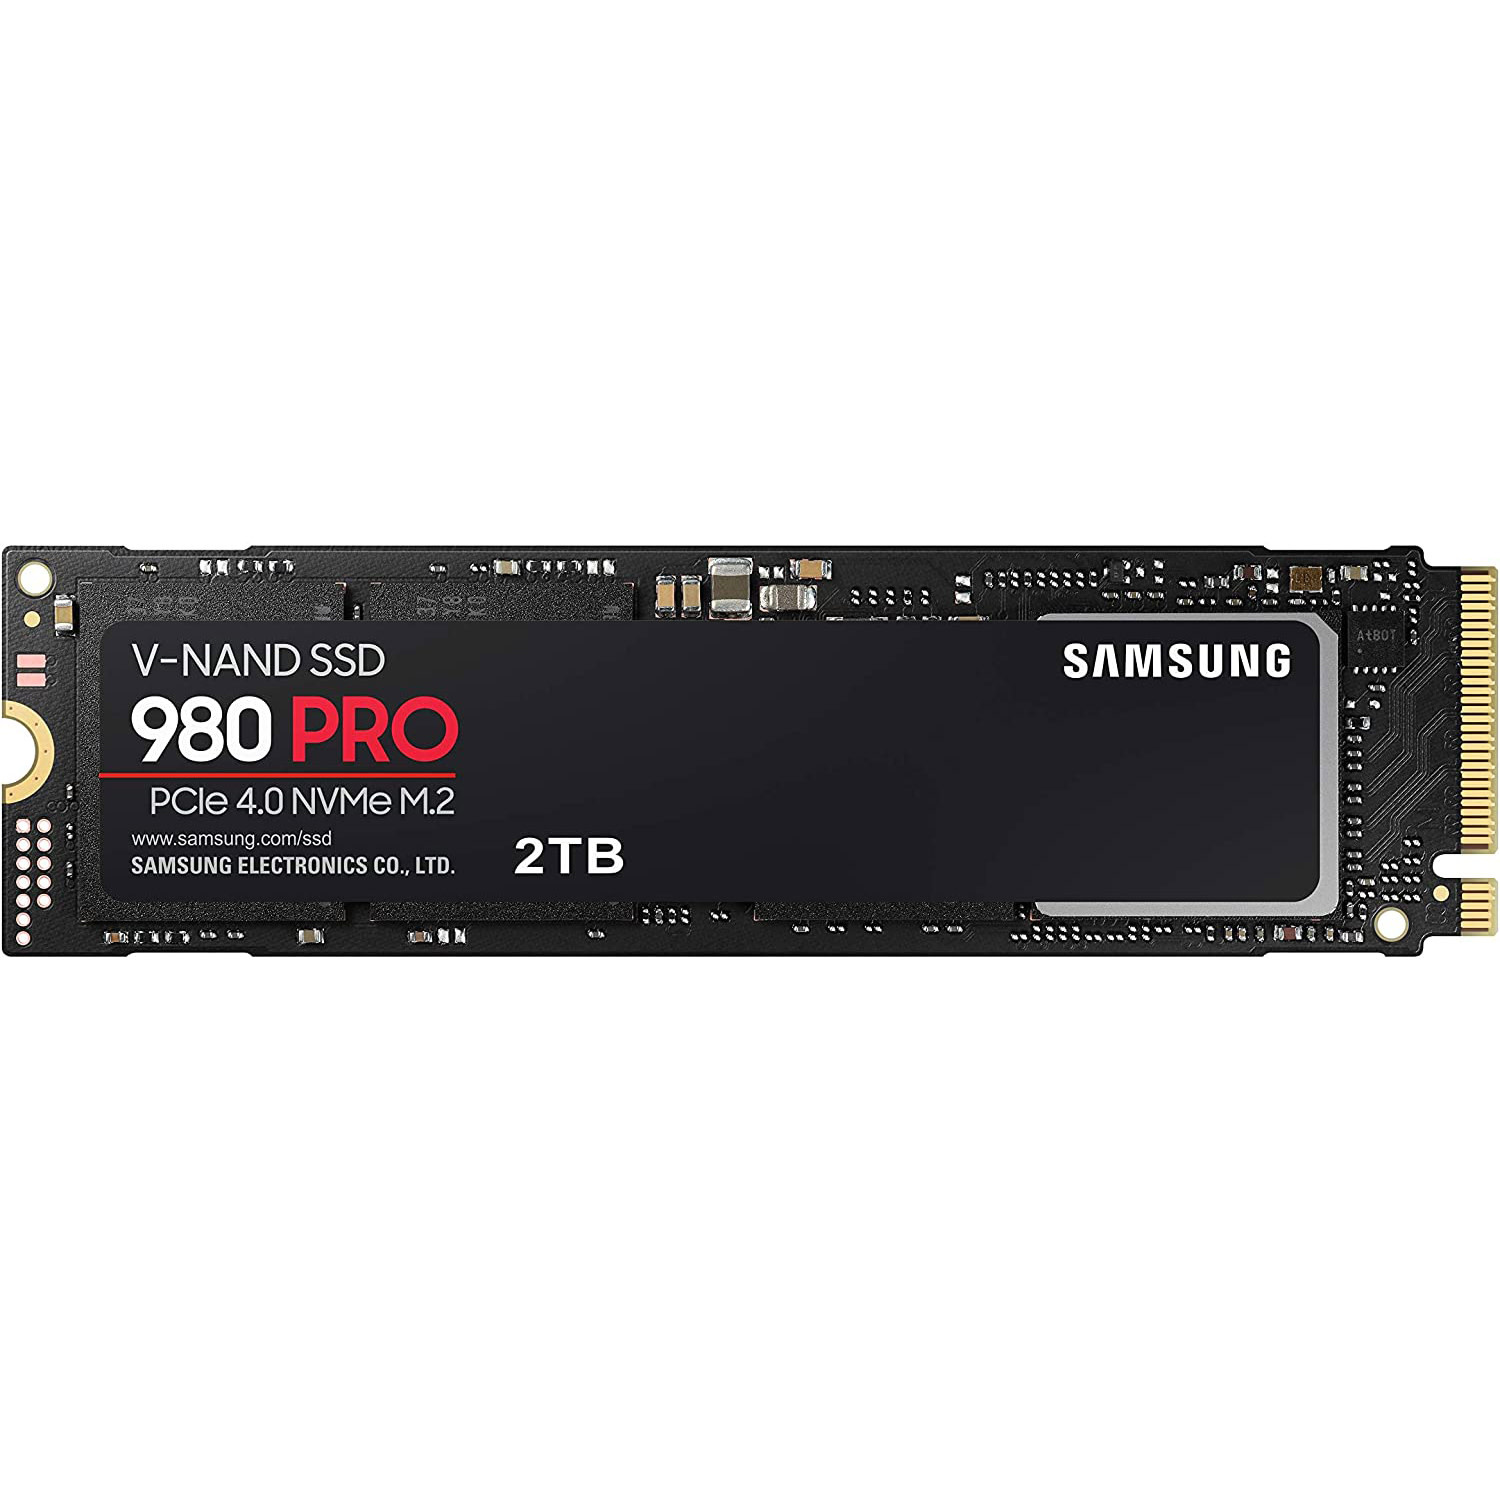 SAMSUNG 980 PRO SSD 2TB PCIe NVMe Gen 4 Gaming M.2 Internal Solid